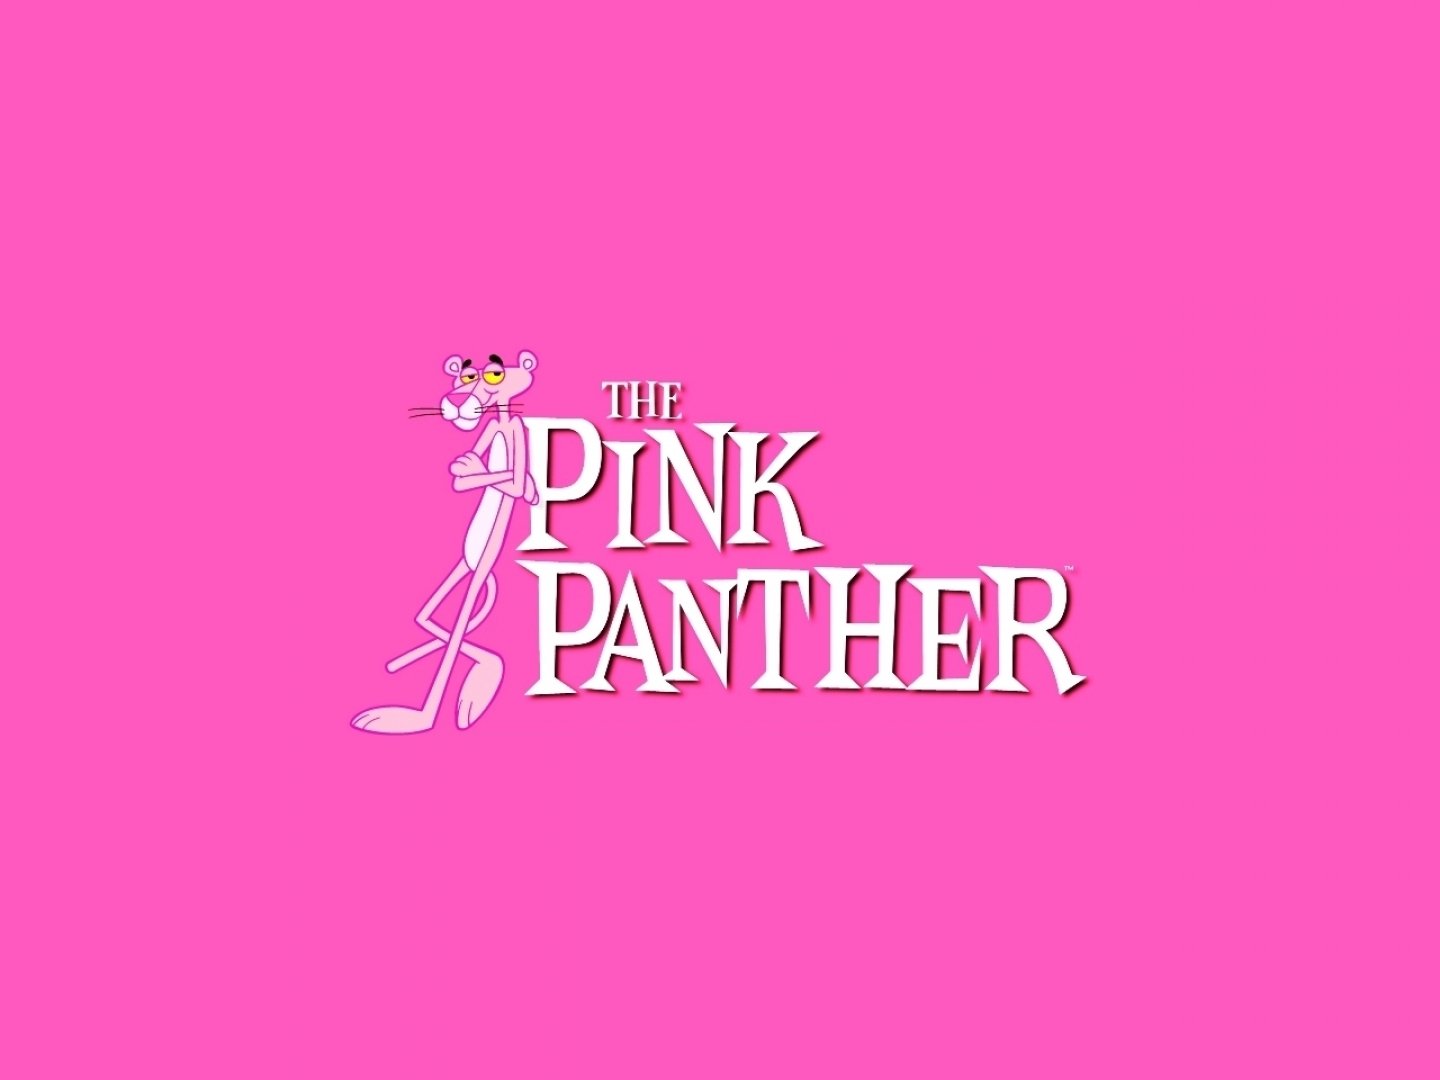 Pink Panther ピンクパンサー Pink Panther スマホ Pcデスクトップ壁紙 画像集 Naver まとめ